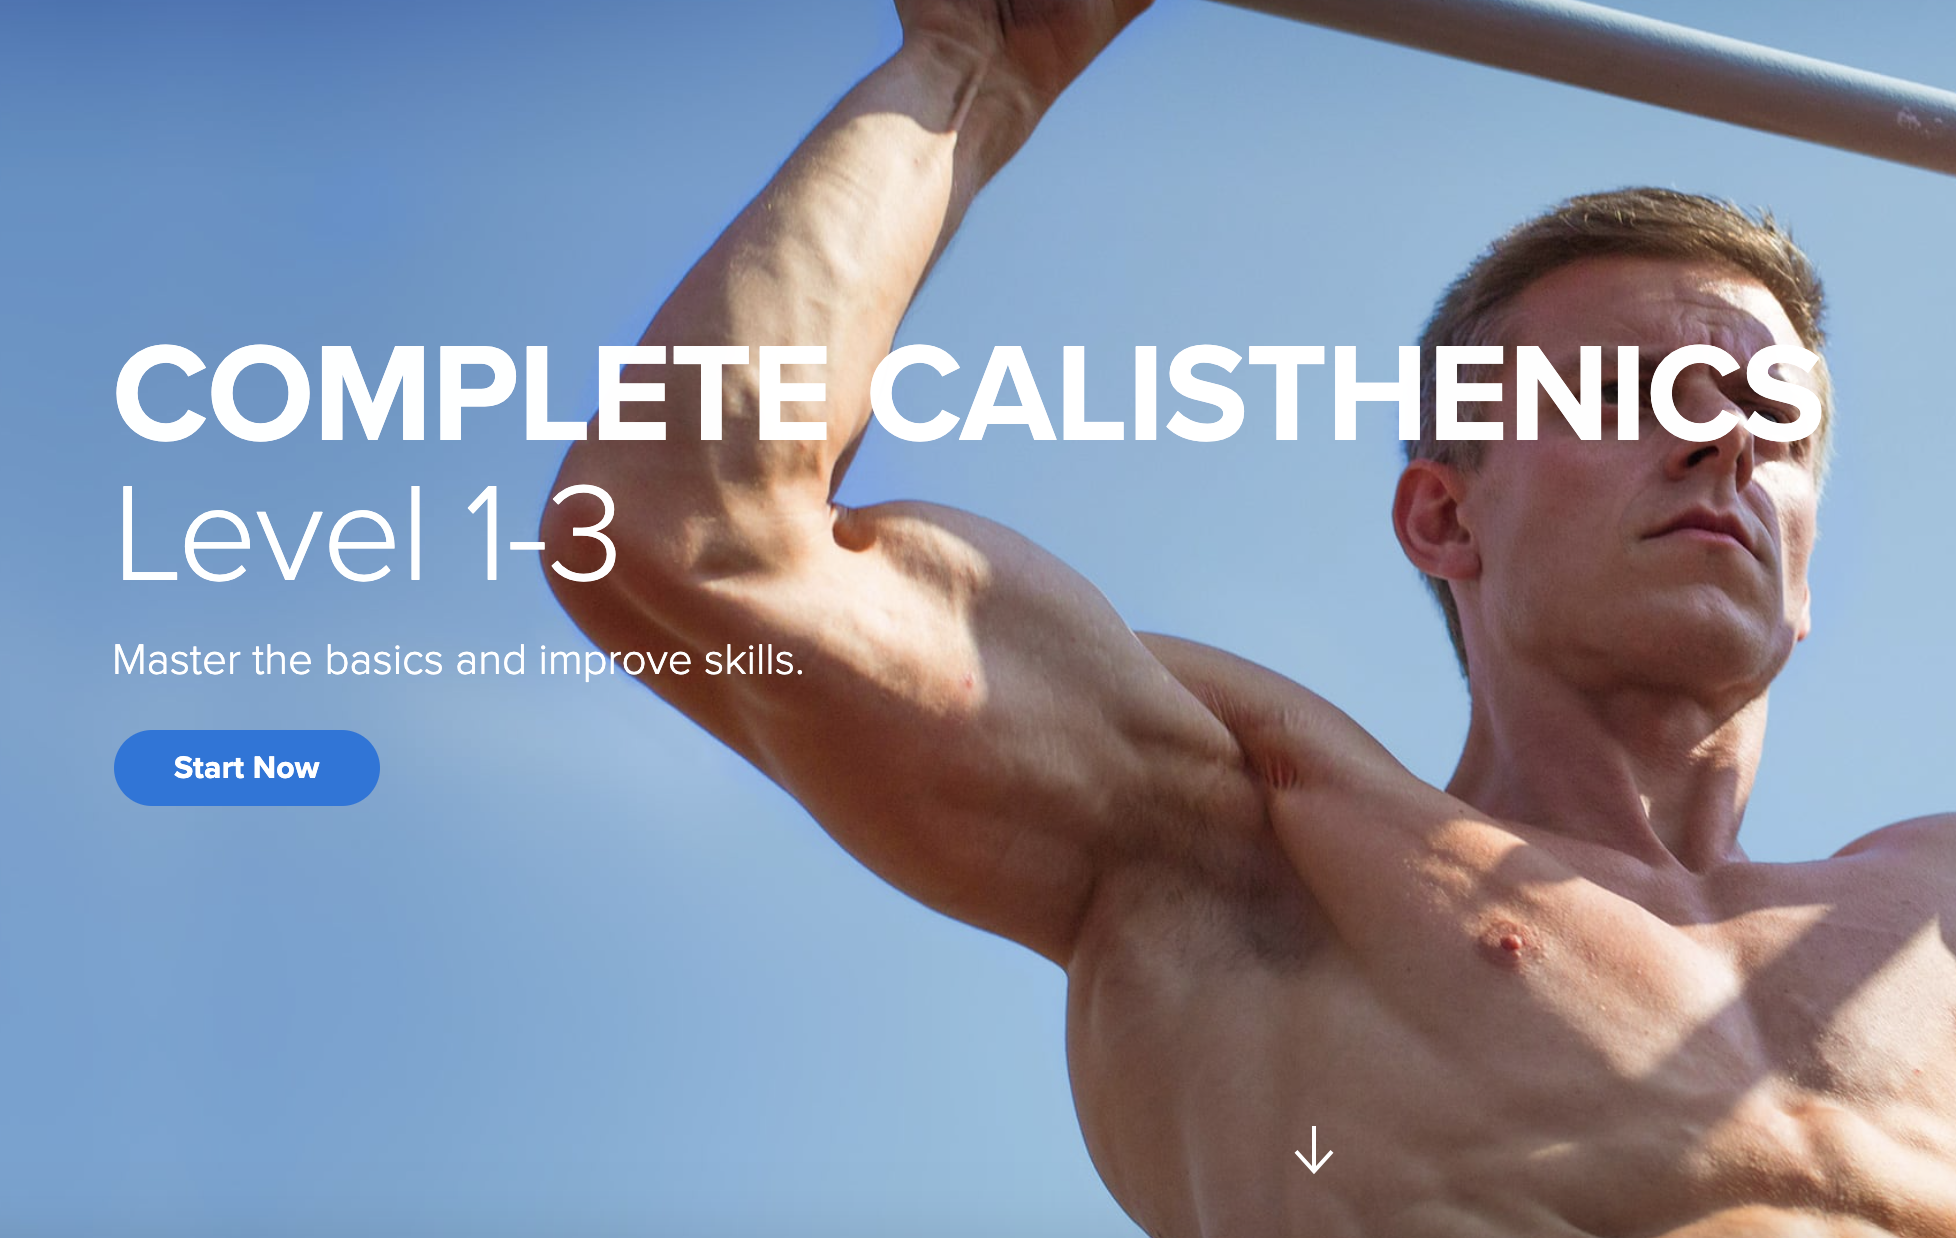 Complete Calisthenics - Level 1-3 Bundle | Cali Move